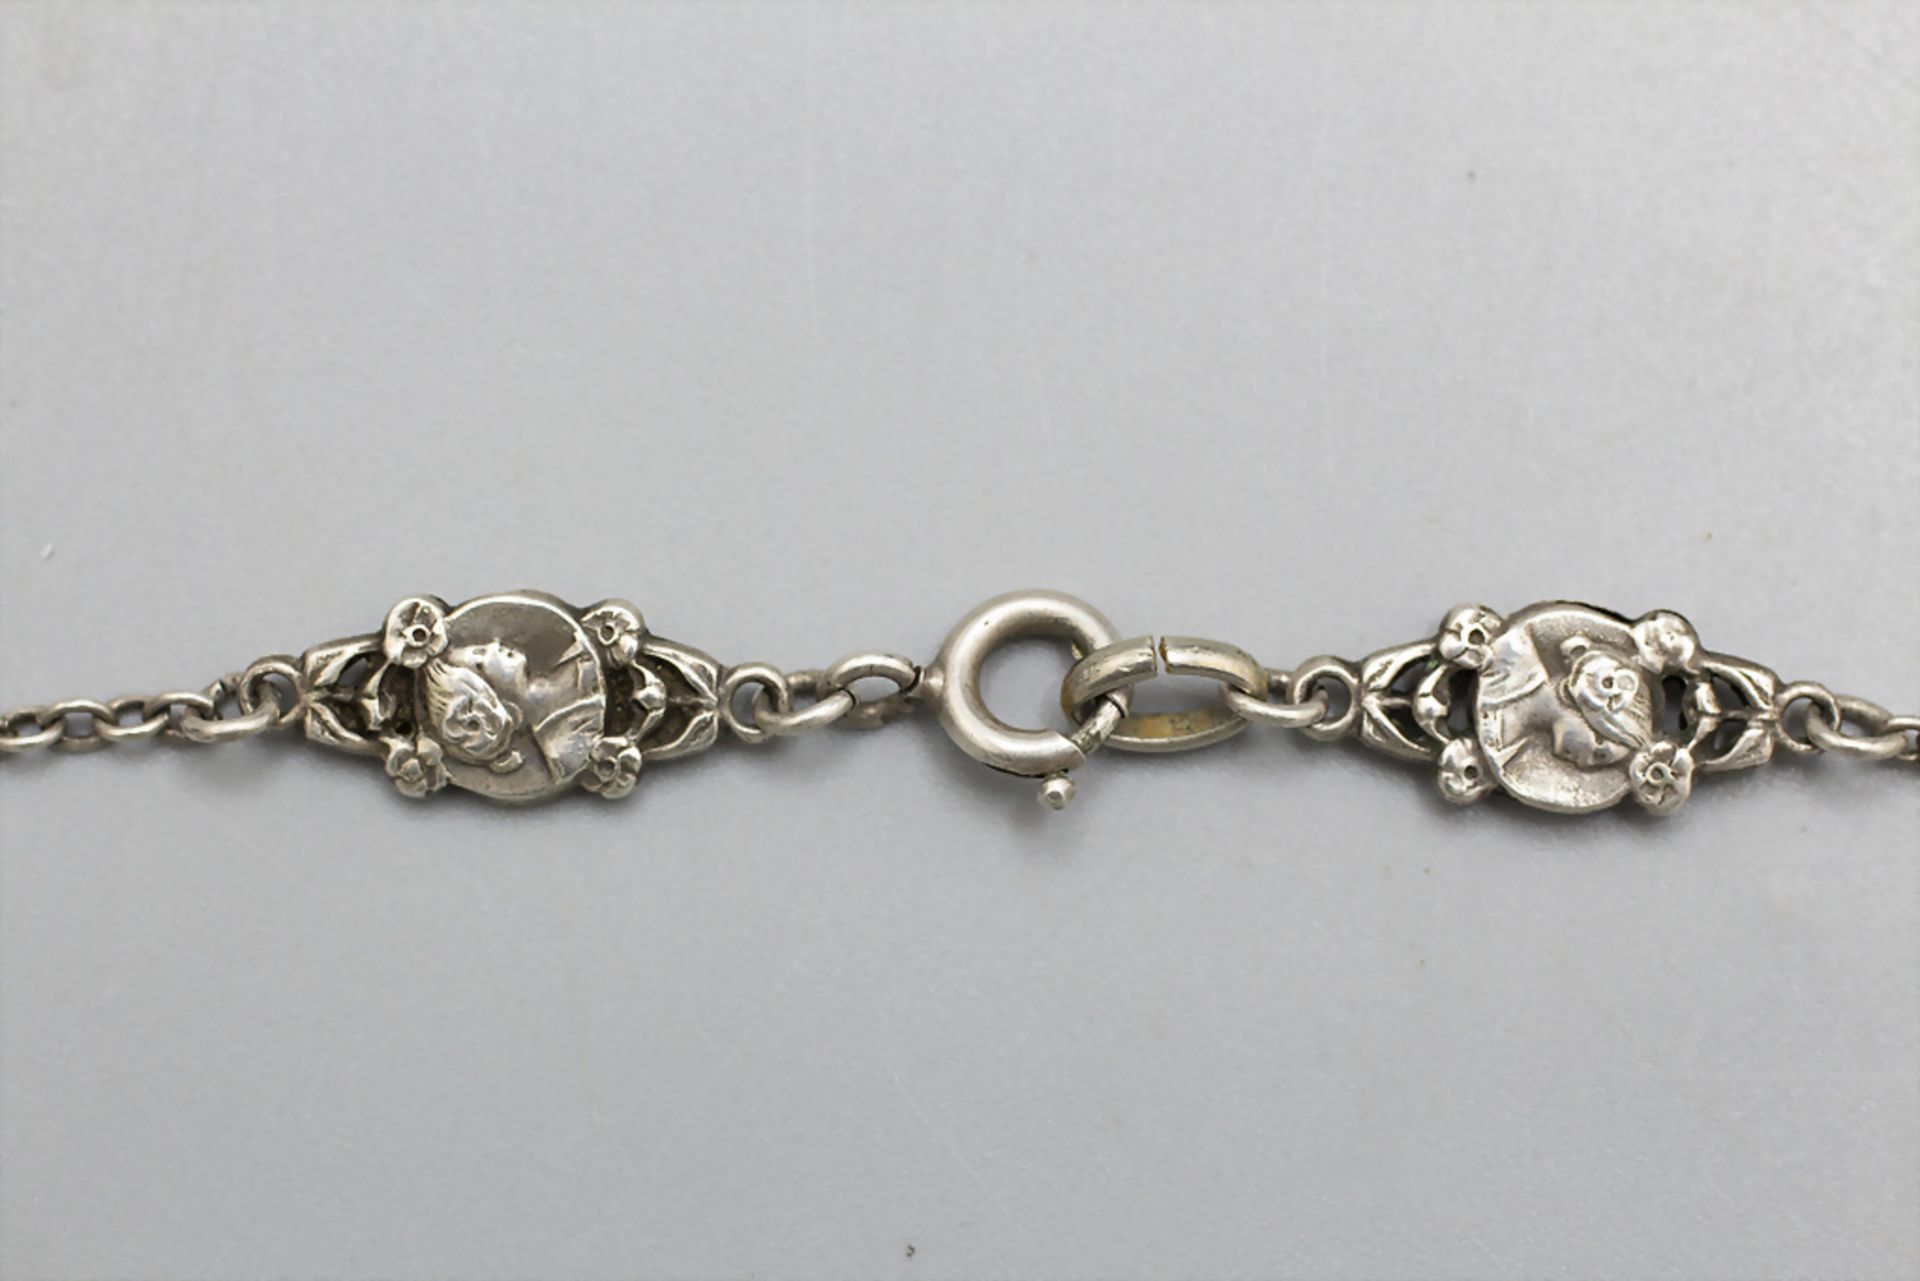 Jugendstil Silberkette mit 4 Medaillons / An Art Nouveau silver necklace with 4 medallions, ... - Image 4 of 4